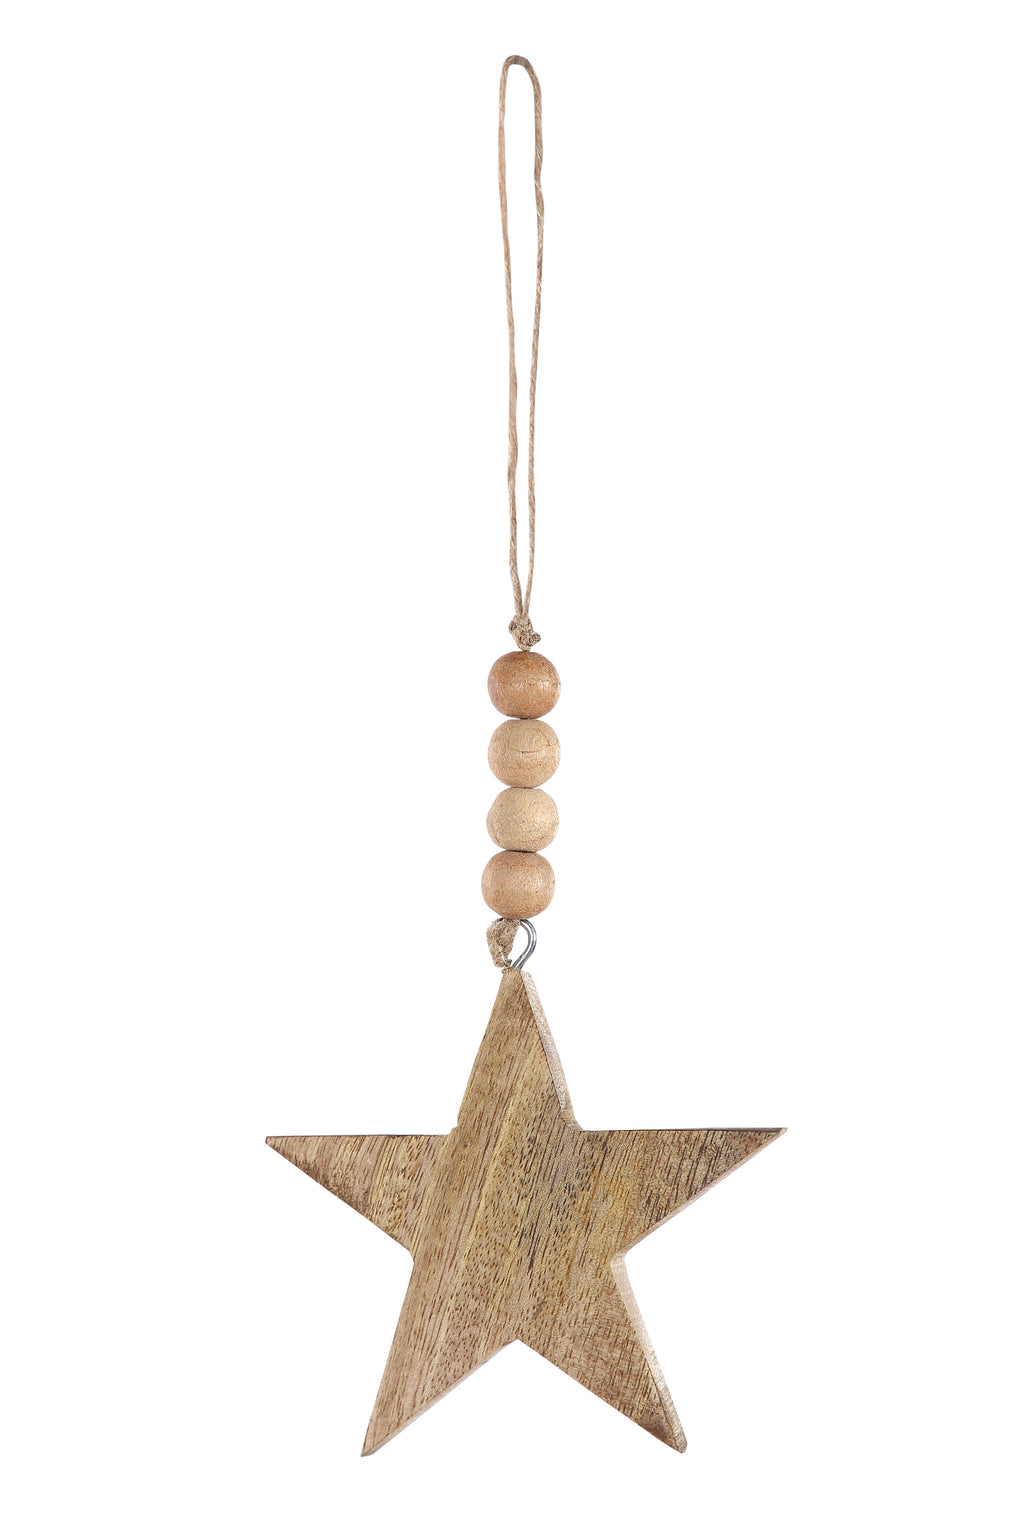 Handmade Wood Christmas Ornament - Heart - 11inch (moq 3)